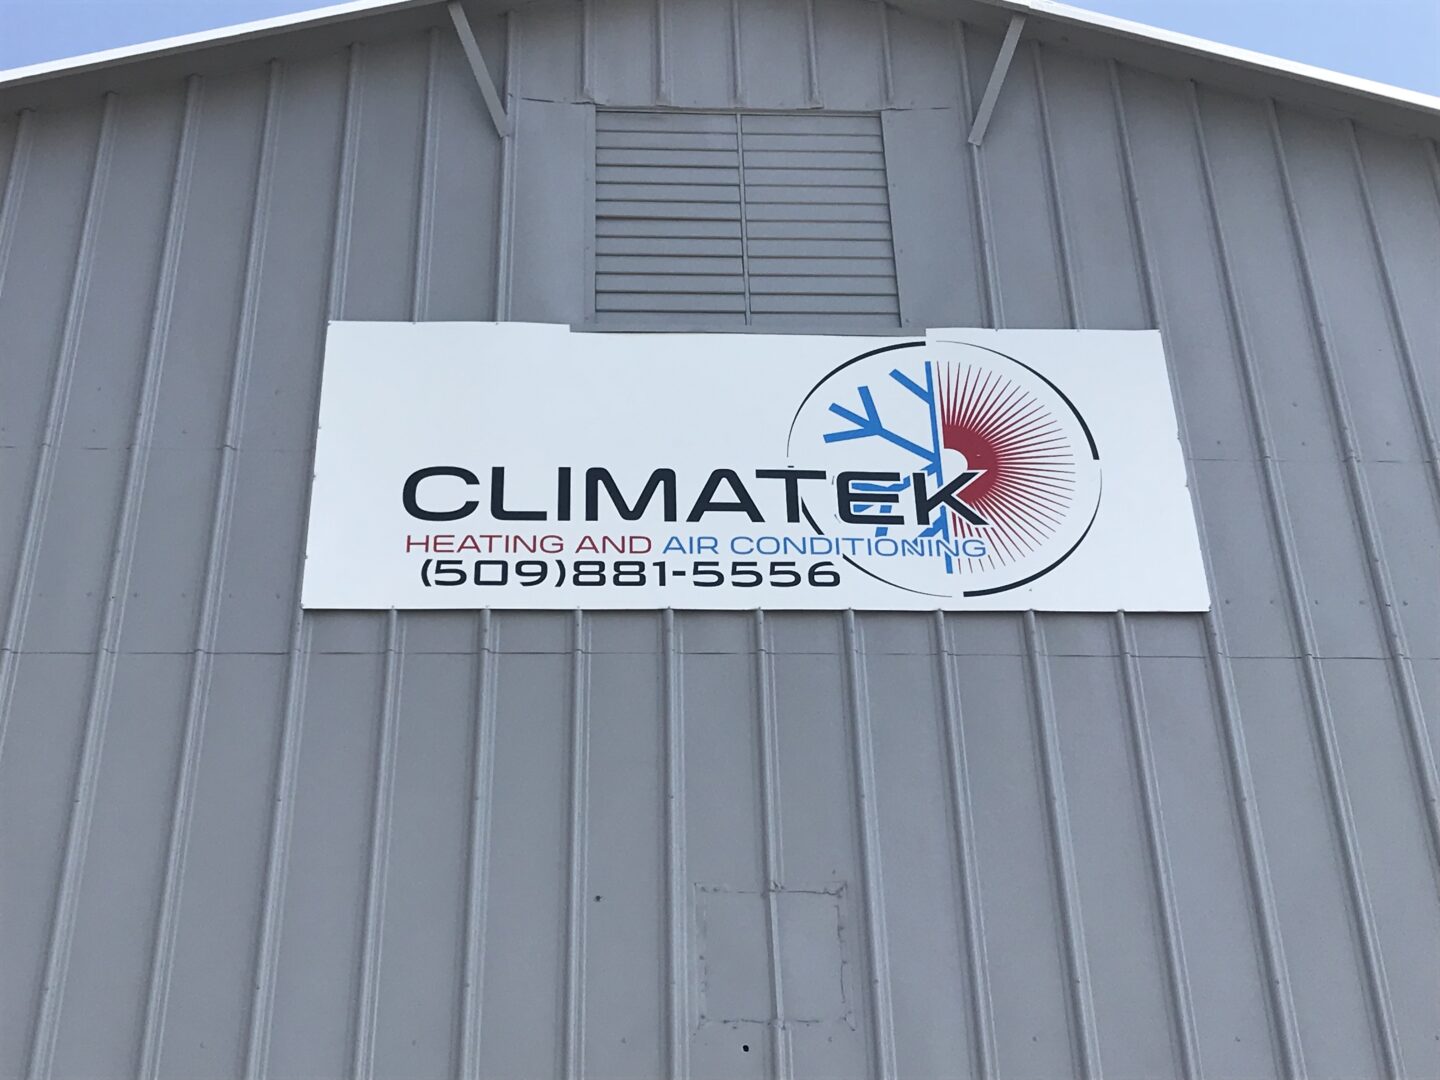 Climatek logo on white board on display